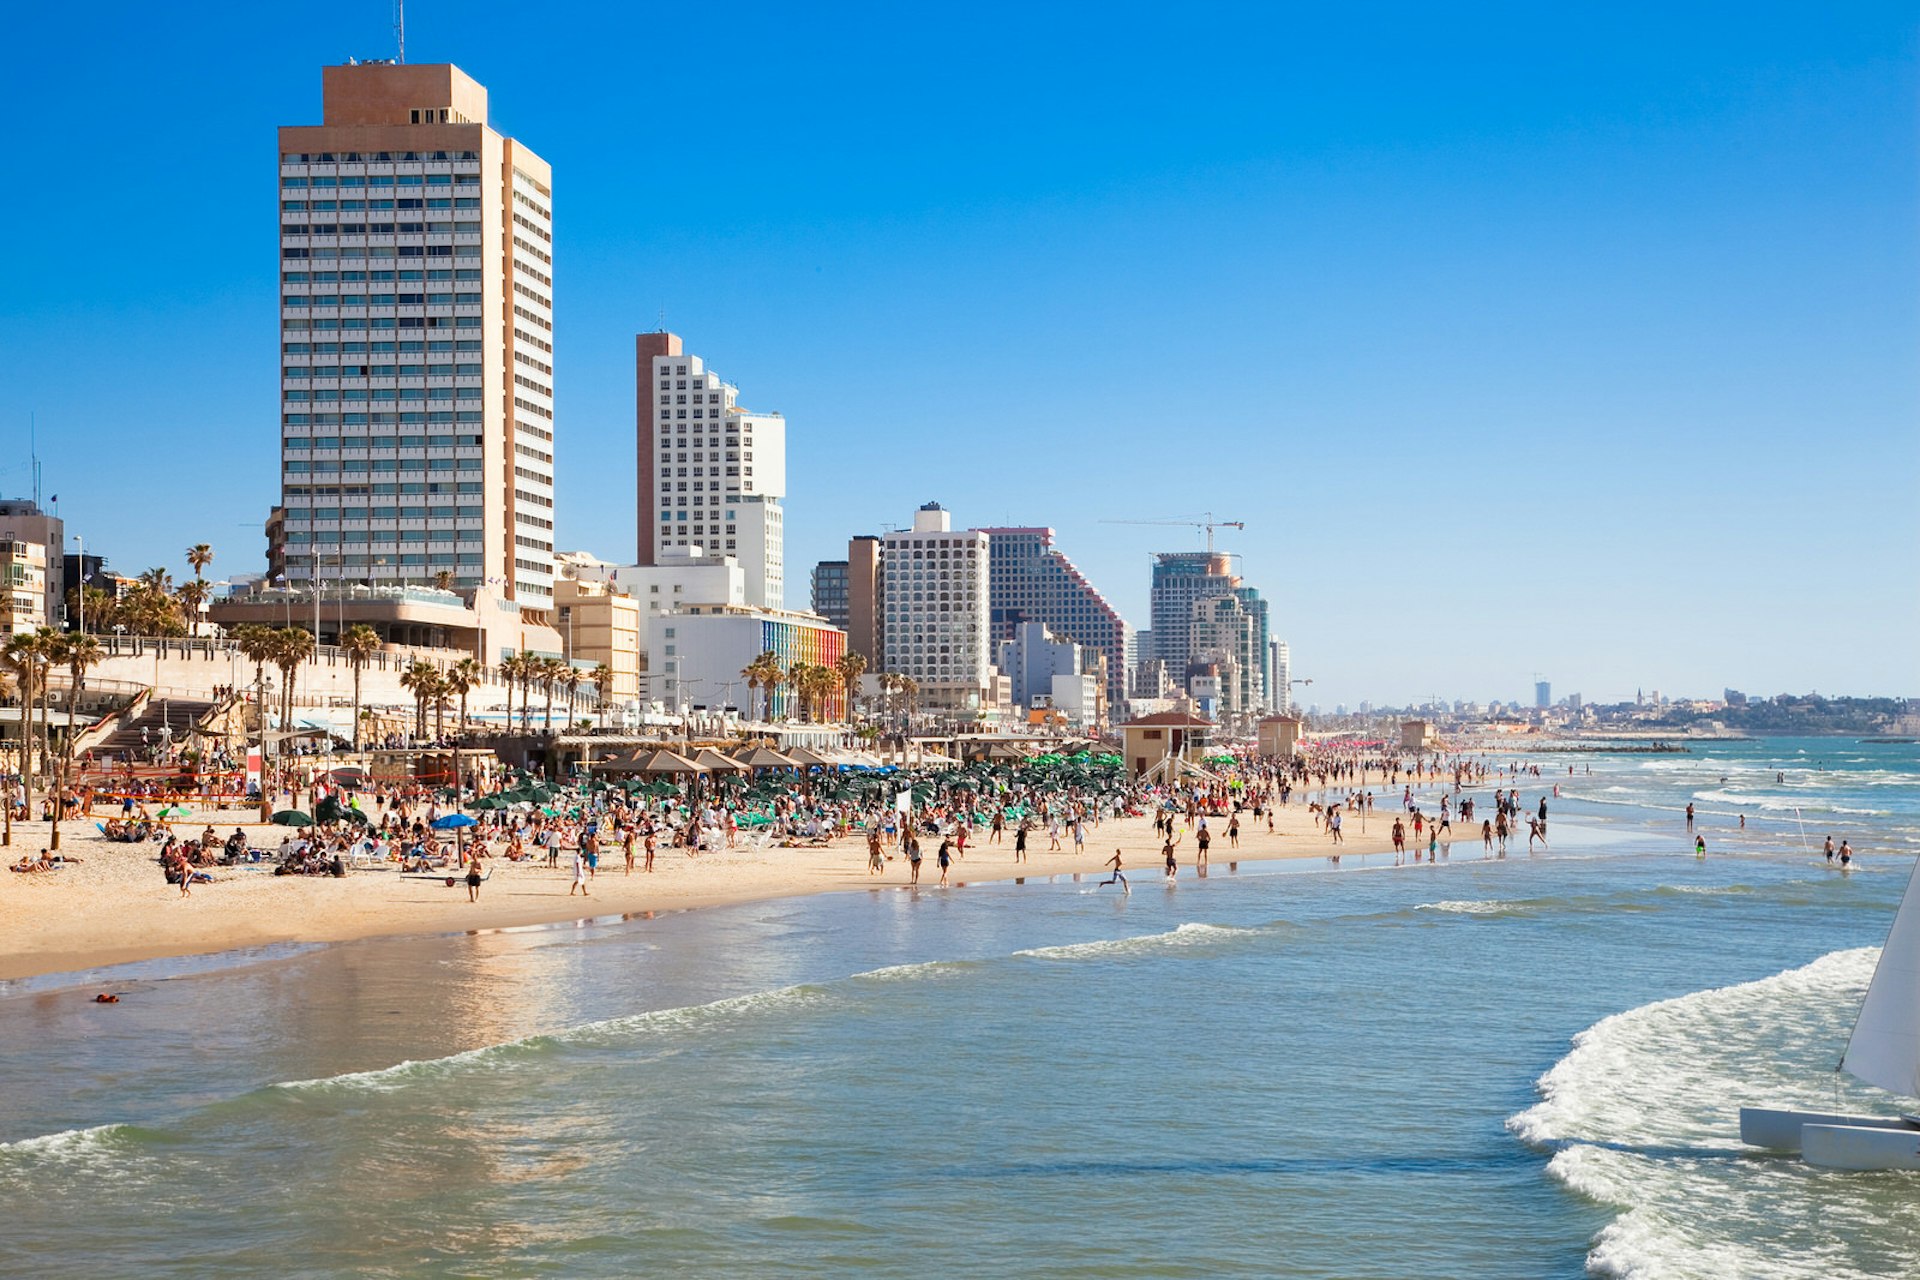 Panoramic view of the Tel Aviv's public beach on the Mediterranean sea